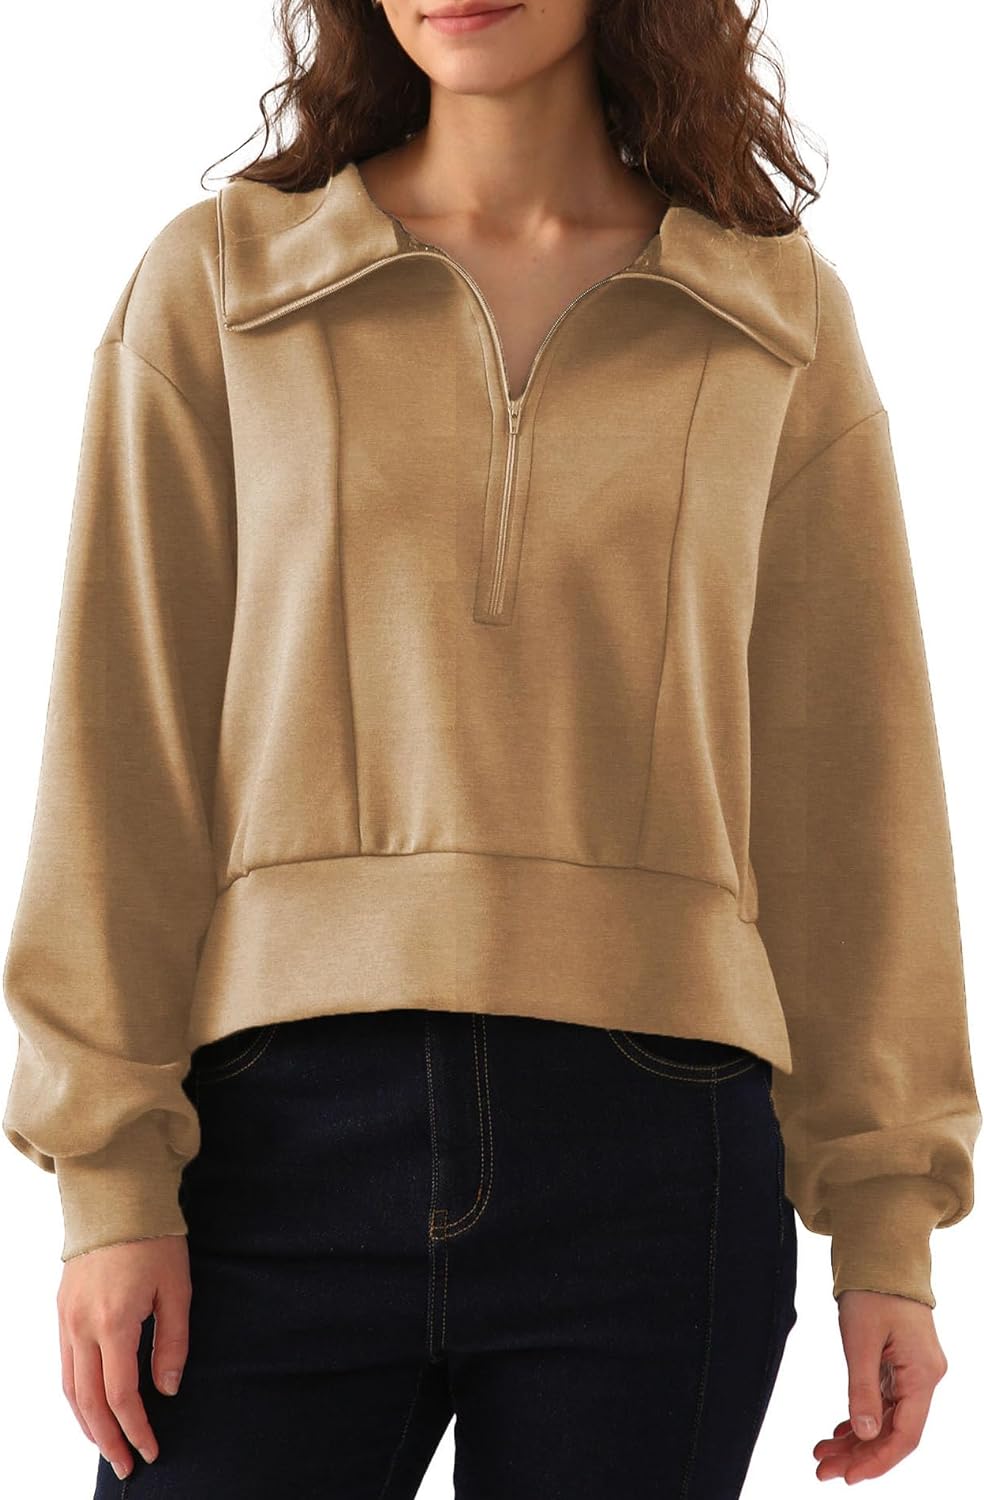 NTG Fad Khaki / XX-Large Cropped Quarter Zip Sweatshirts Slightly Crop Tops